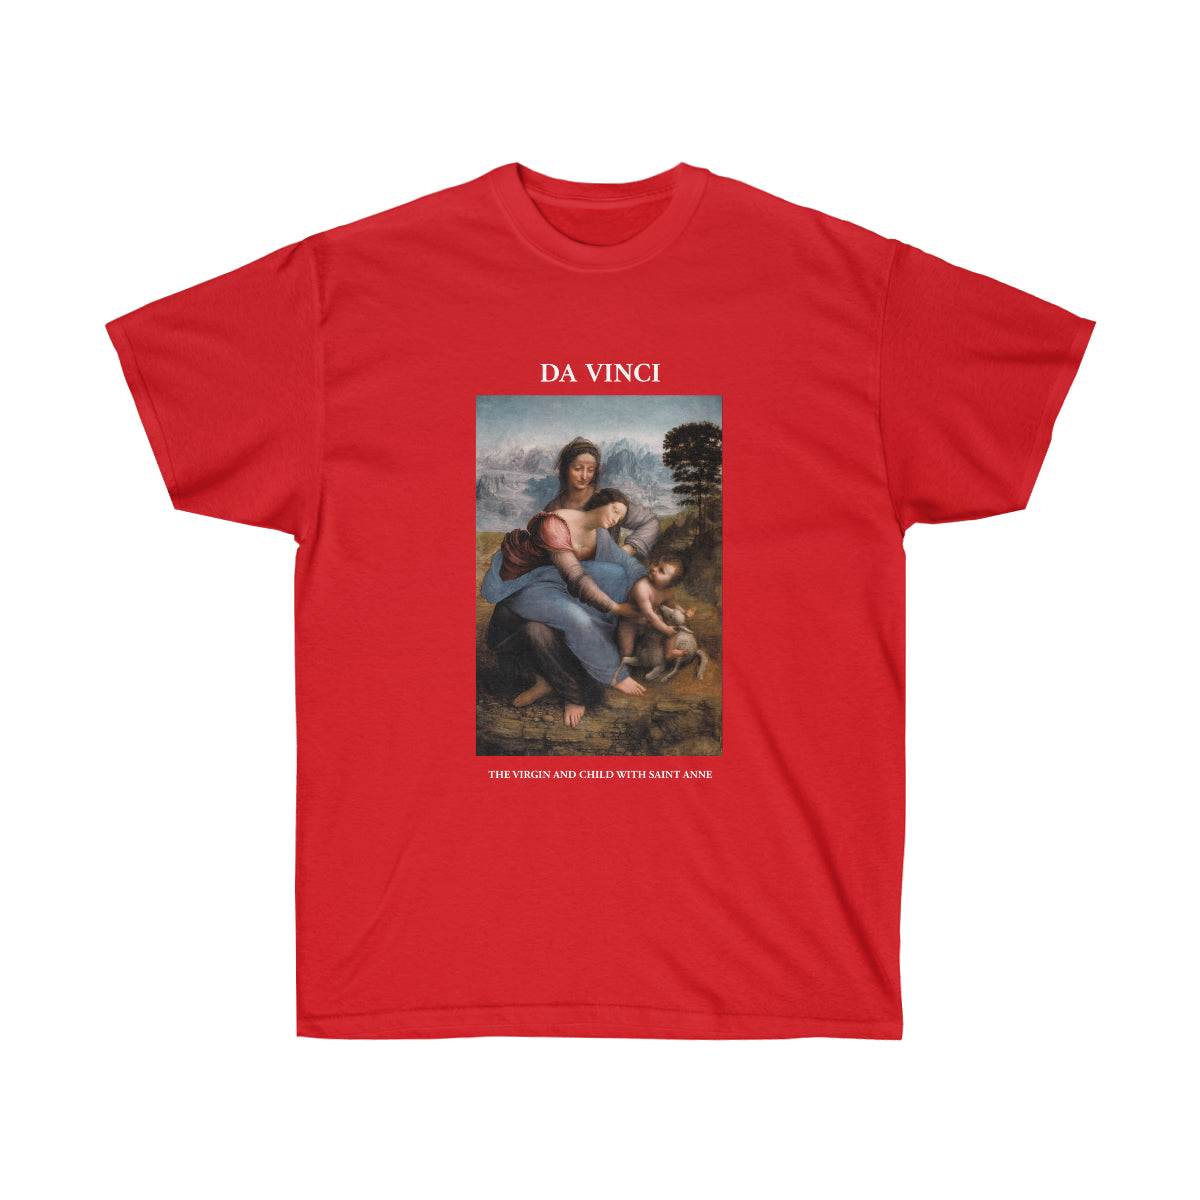 Leonardo da Vinci The Virgin and Child with Saint Anne T-shirt